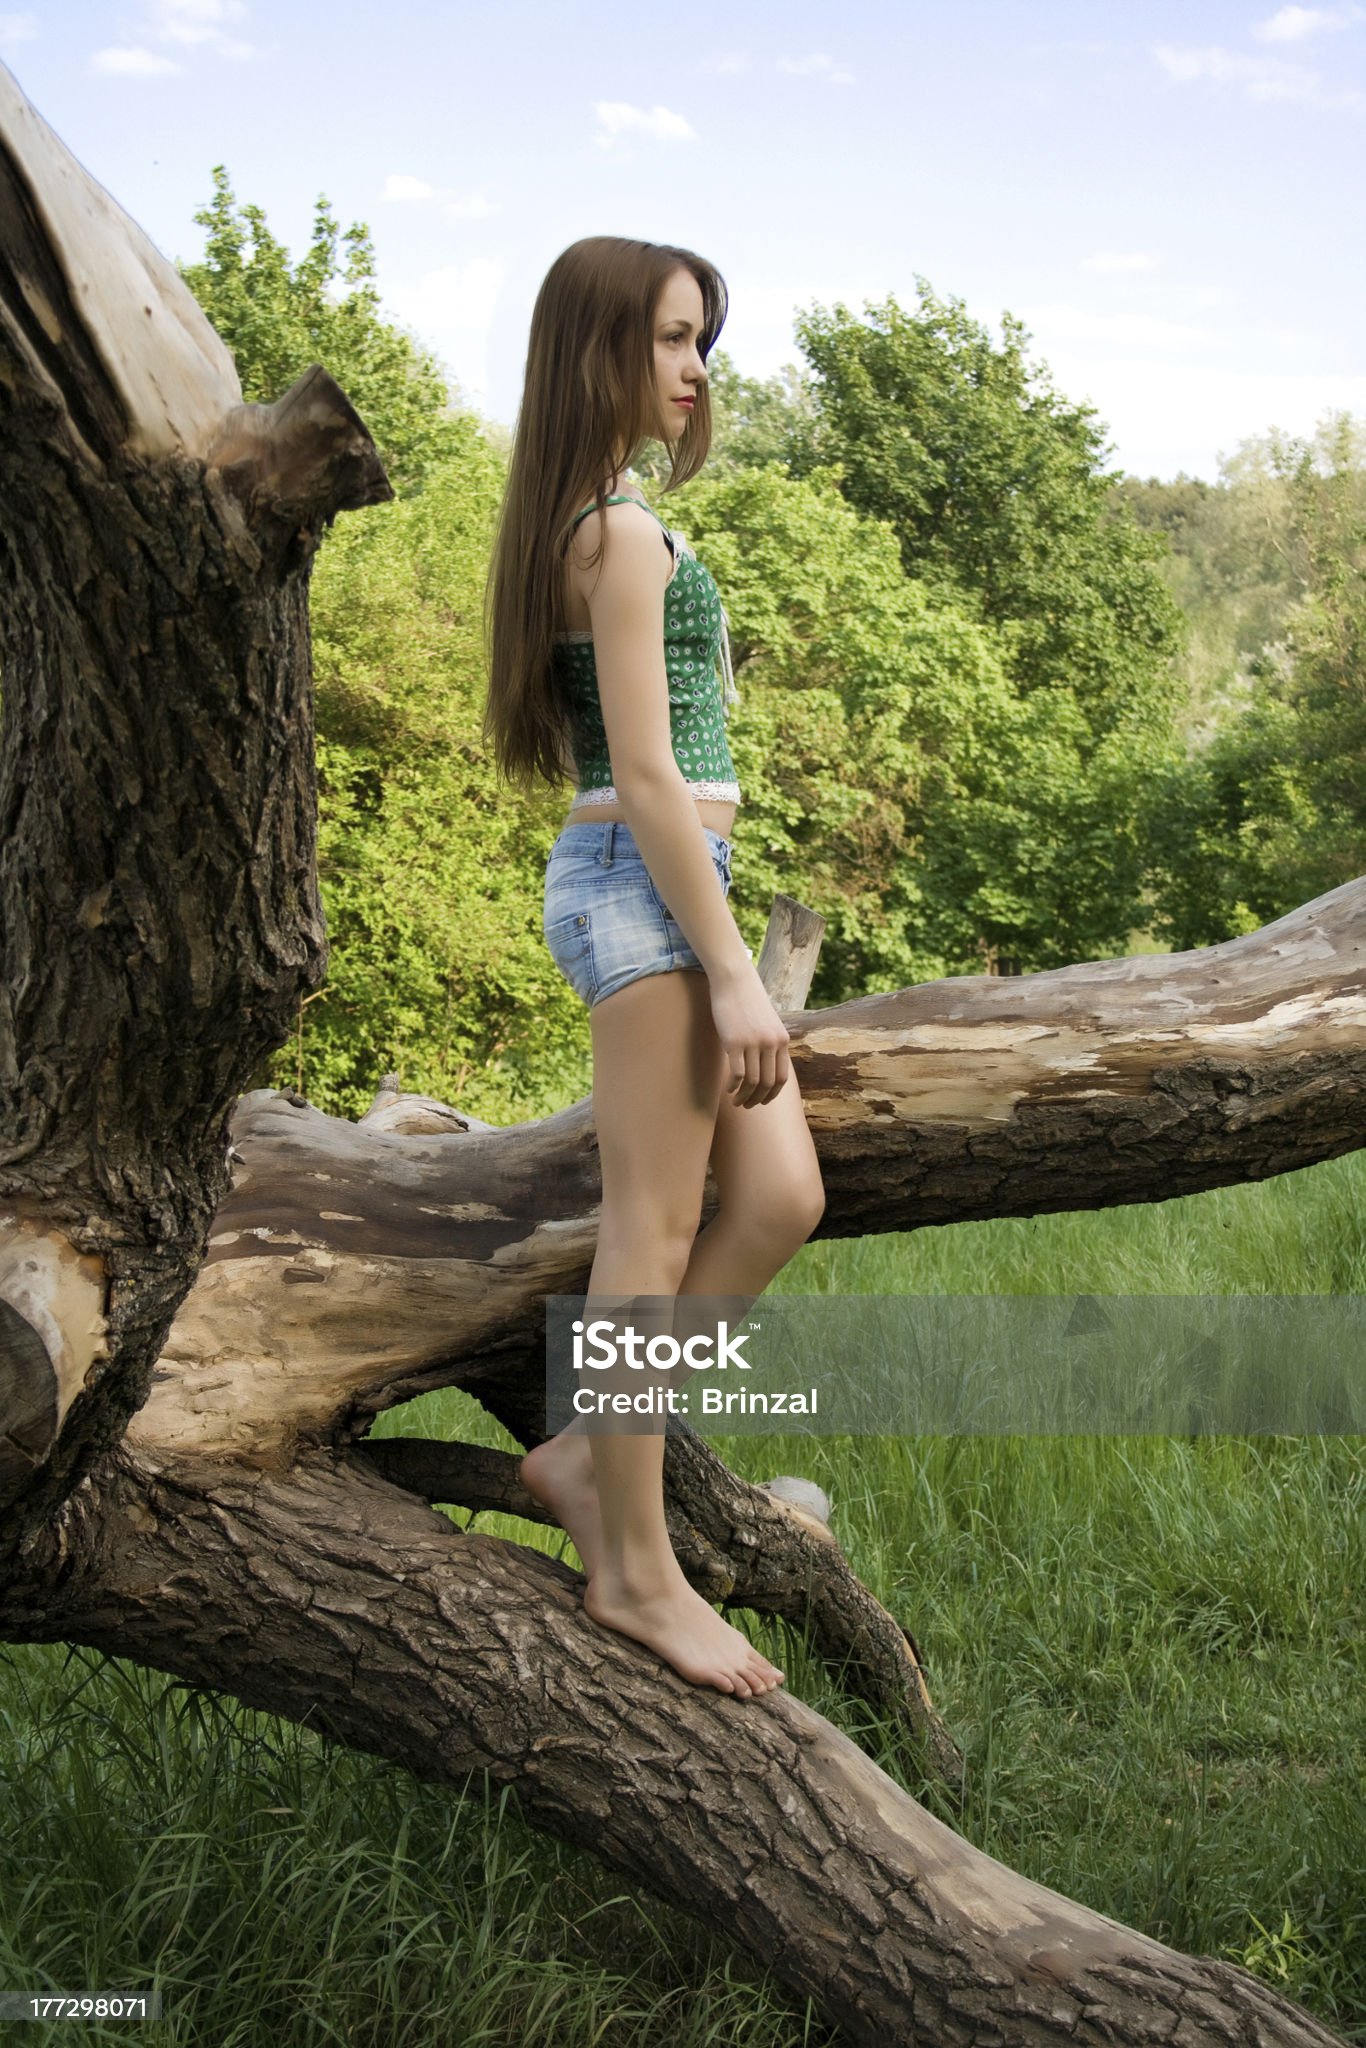 https://media.istockphoto.com/id/177298071/photo/girl-leaning-against-a-tree.jpg?s=2048x2048&amp;w=is&amp;k=20&amp;c=HYiHD-nZxG5CyAb8IxOeXfO4blJTw1KUDJxUkZD75r4=